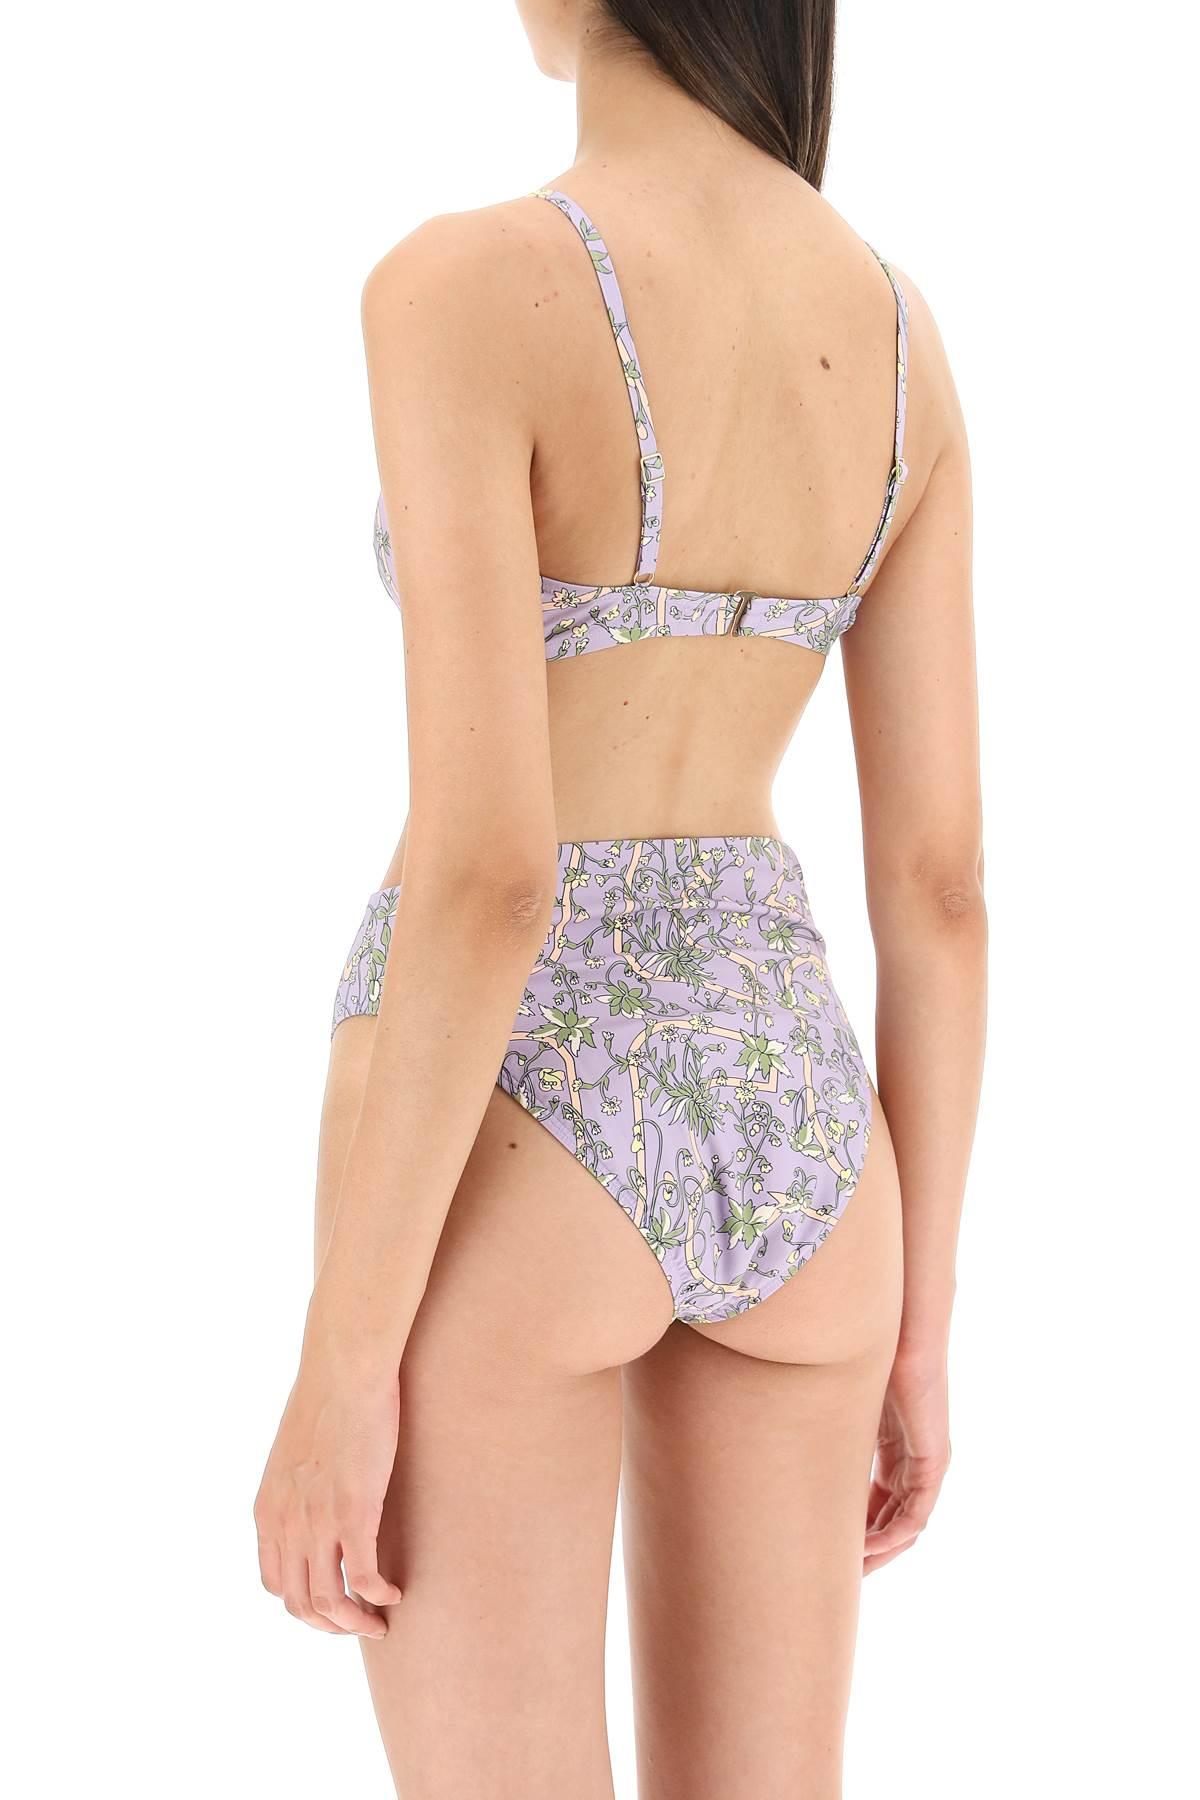 Tory Burch Printed Balconette Bikini Top | Lyst